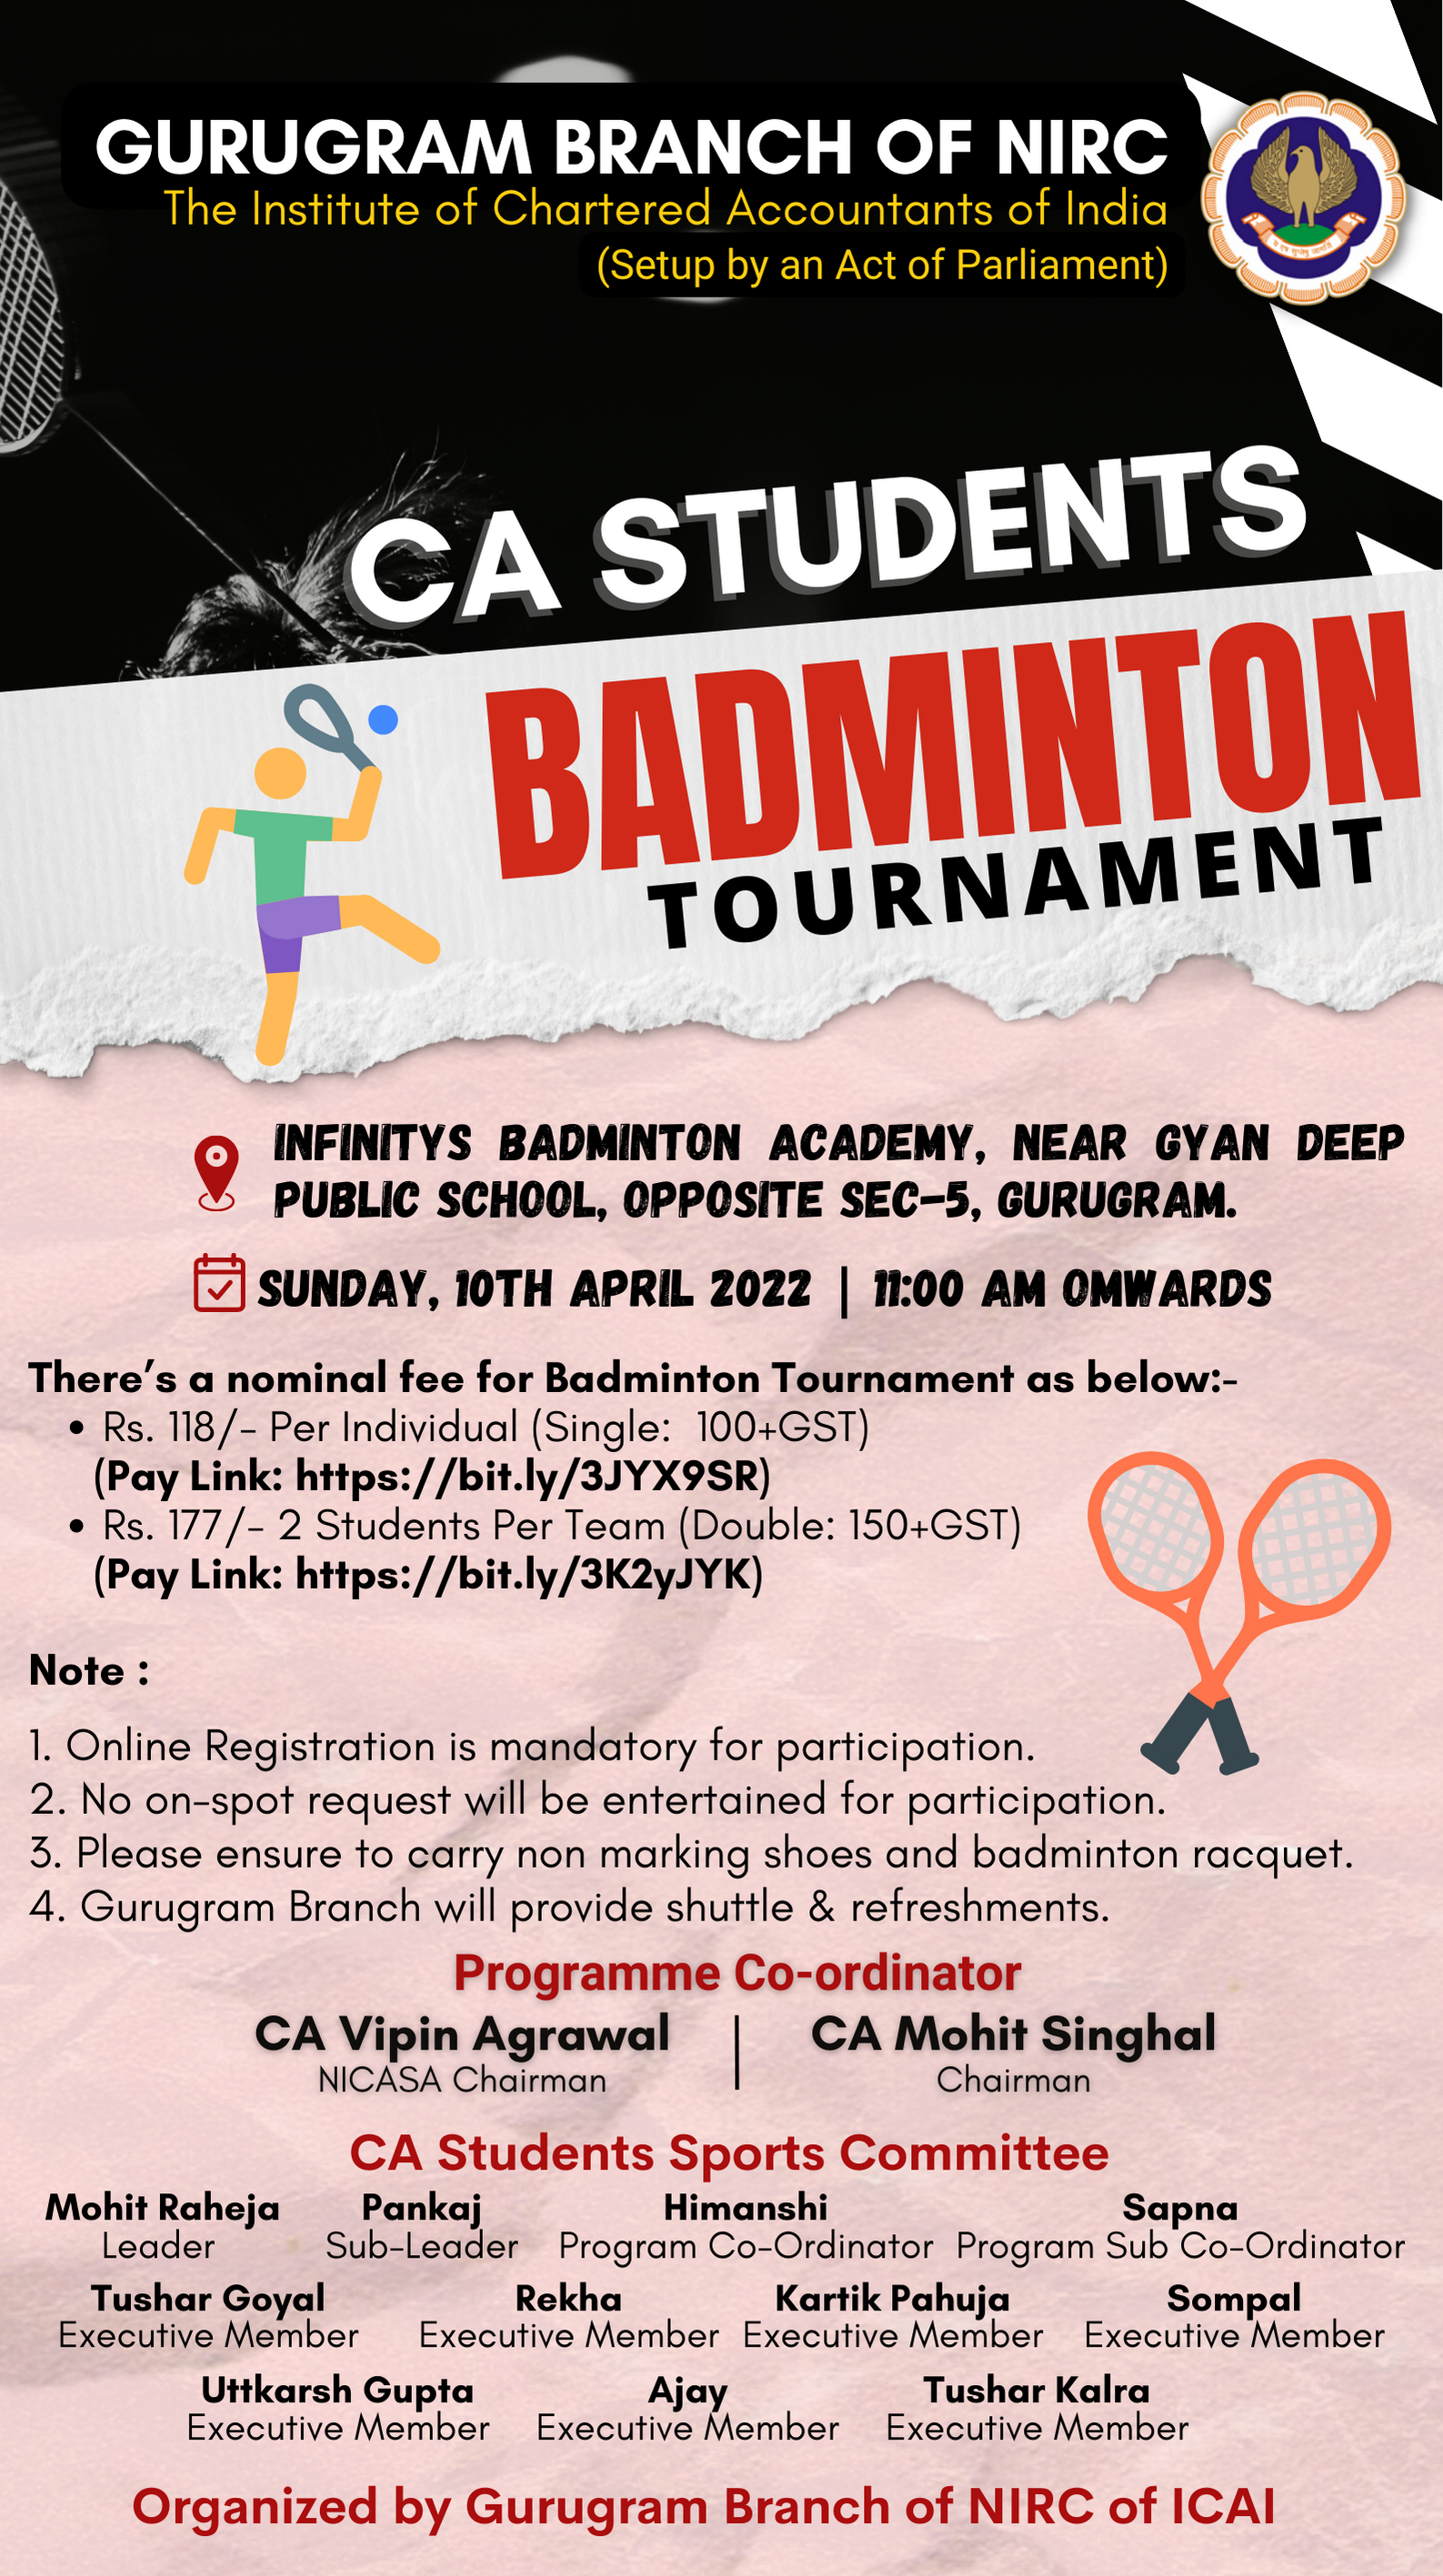 Badminton Tournament for CA Students